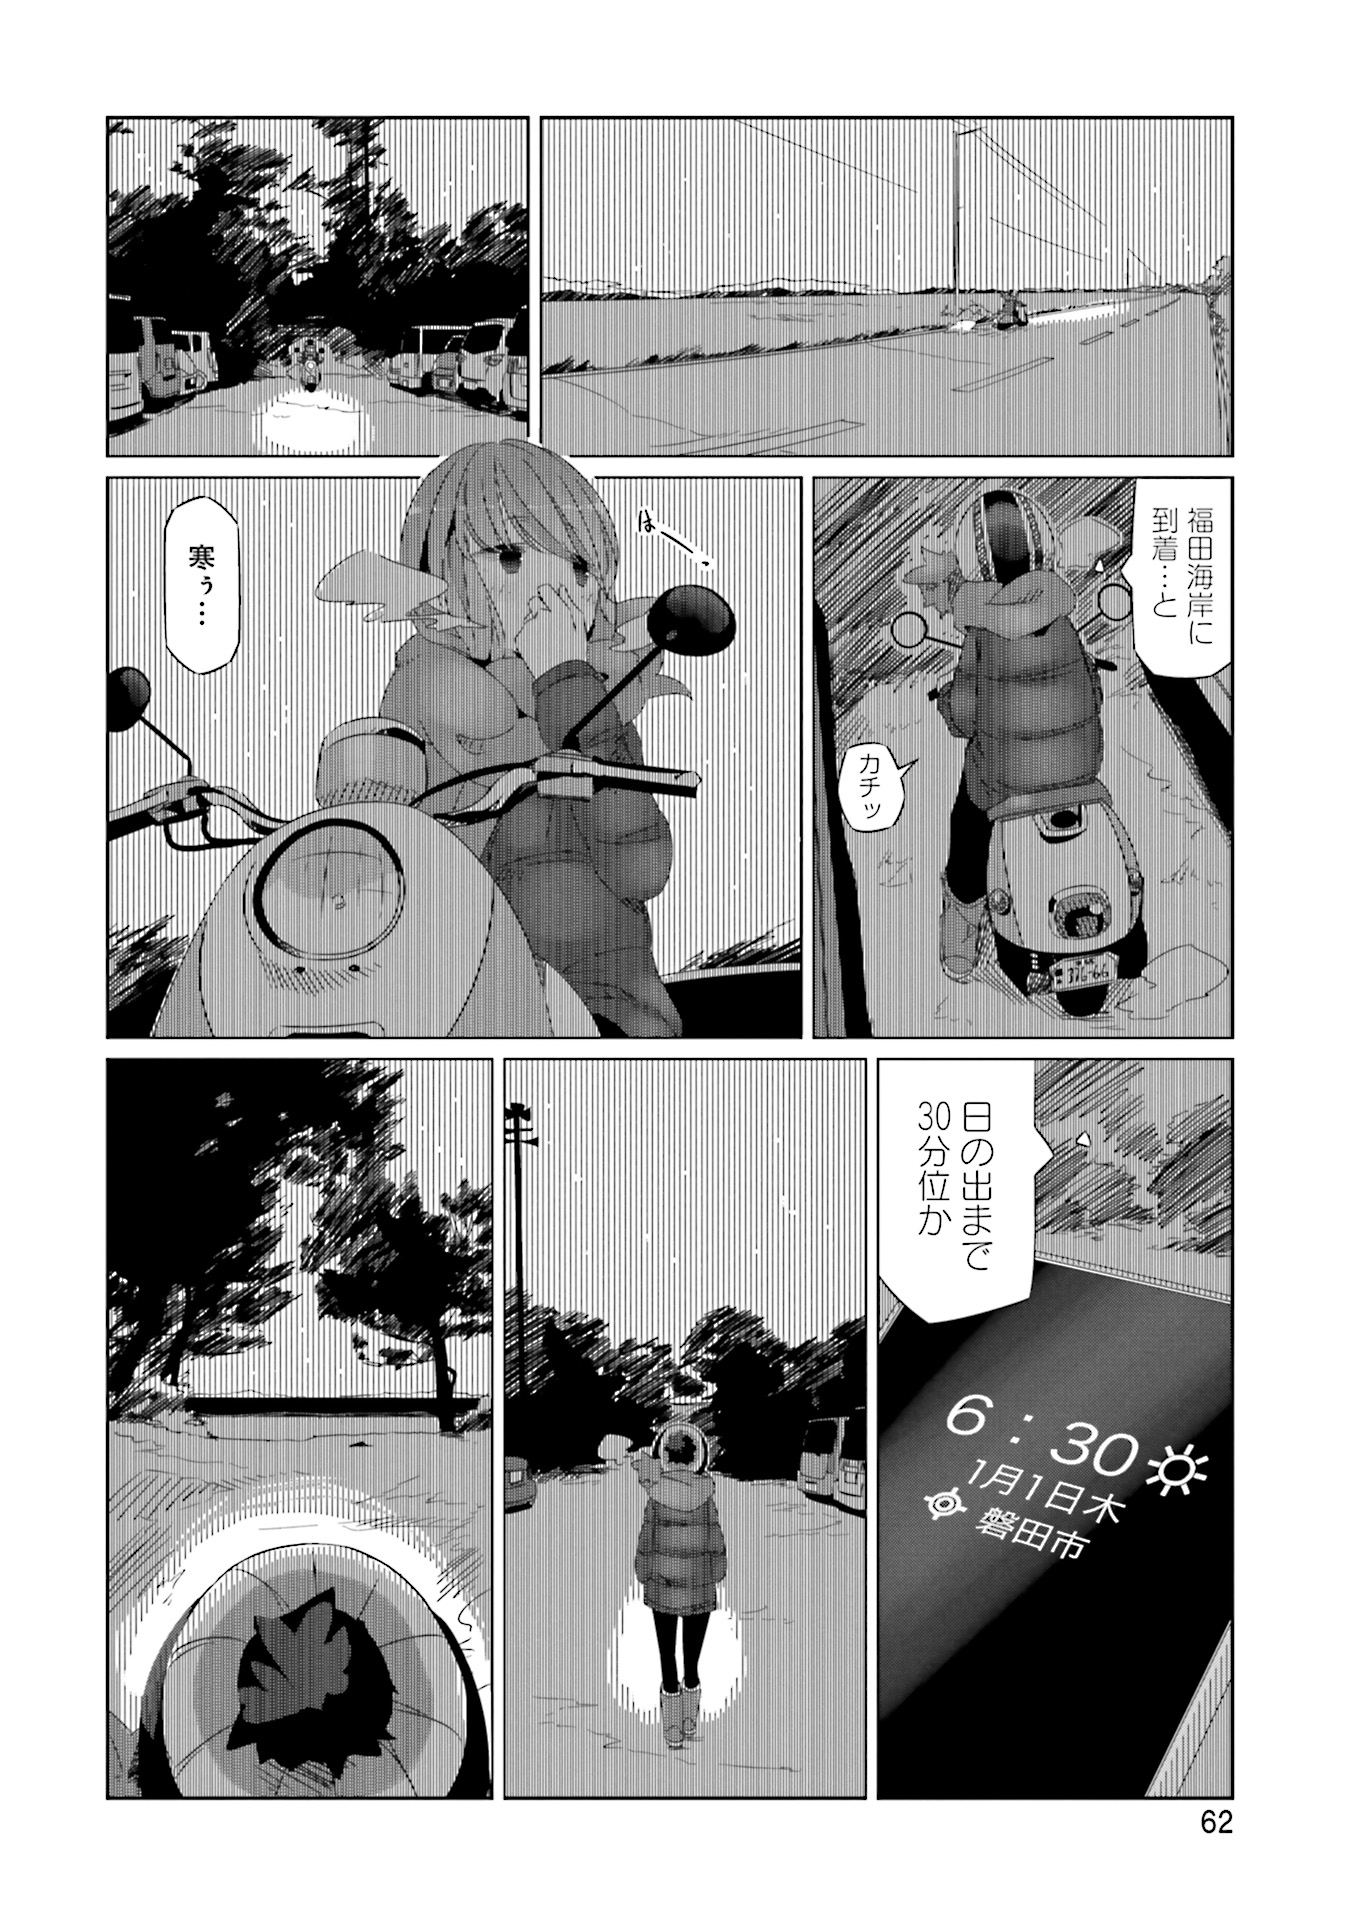 Yuru Camp - Chapter 26 - Page 4